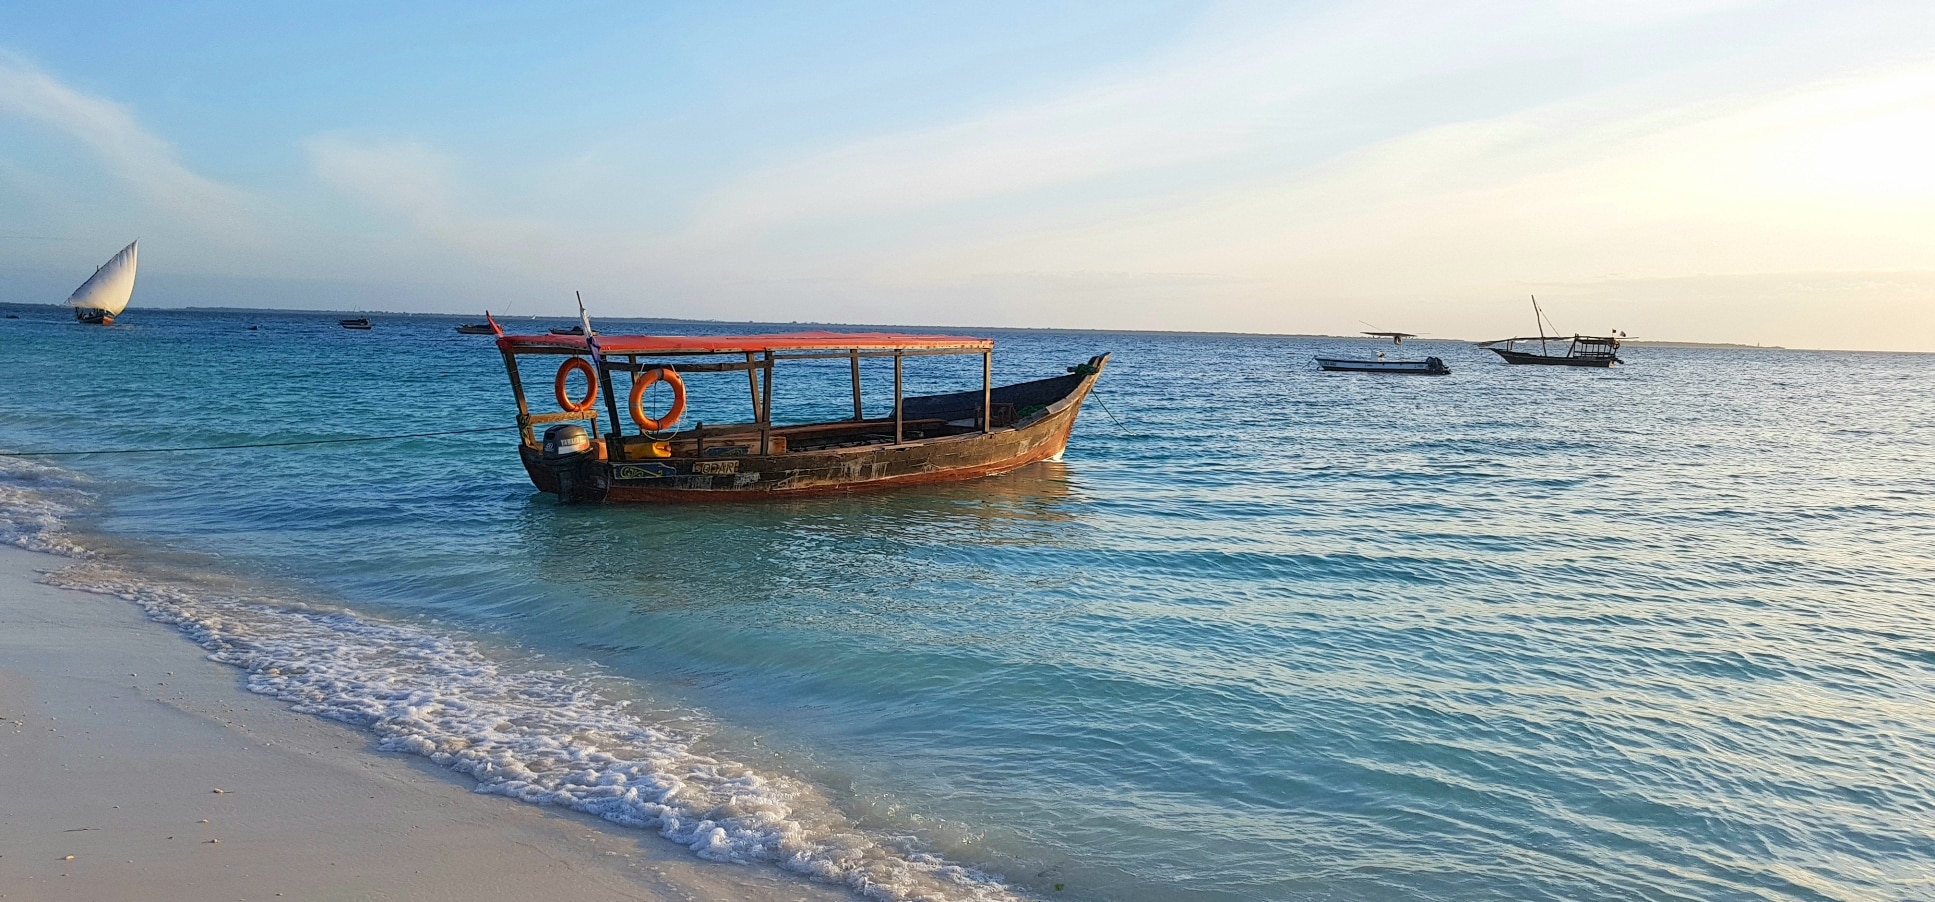 Putovanje Zanzibar 2022